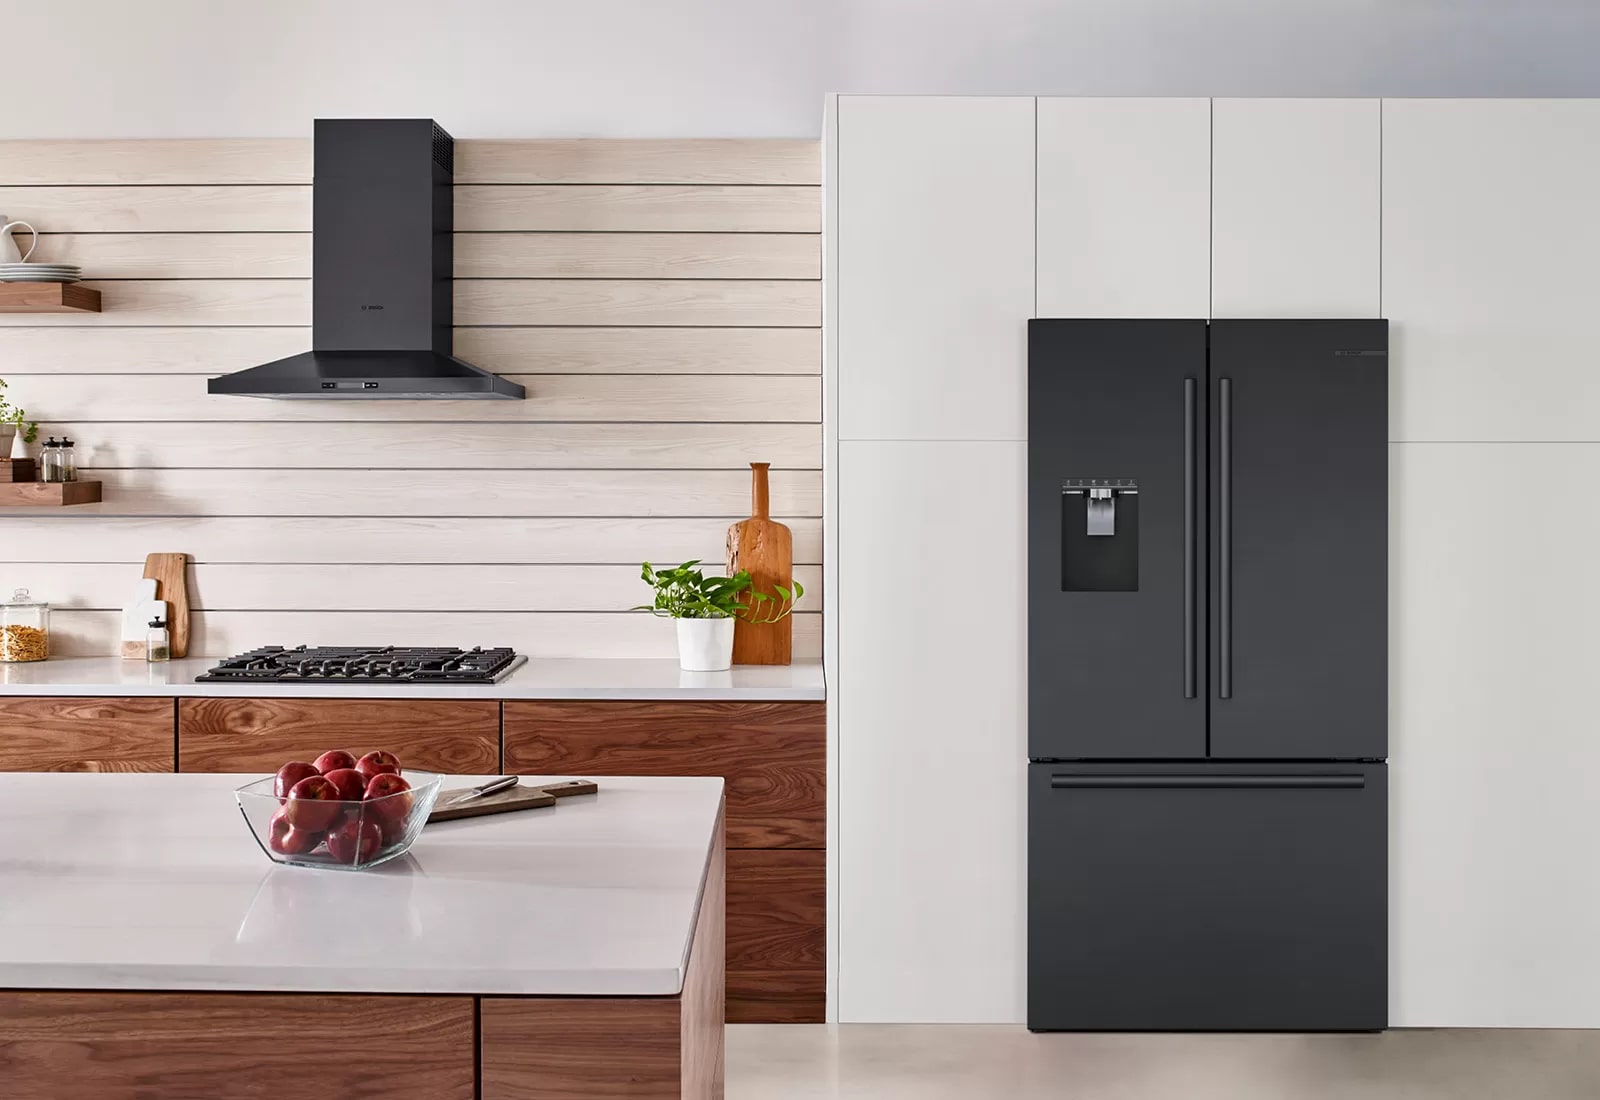 Bosch - 35.625 Inch 21.6 cu. ft French Door Refrigerator in Black Stainless - B36CD50SNB